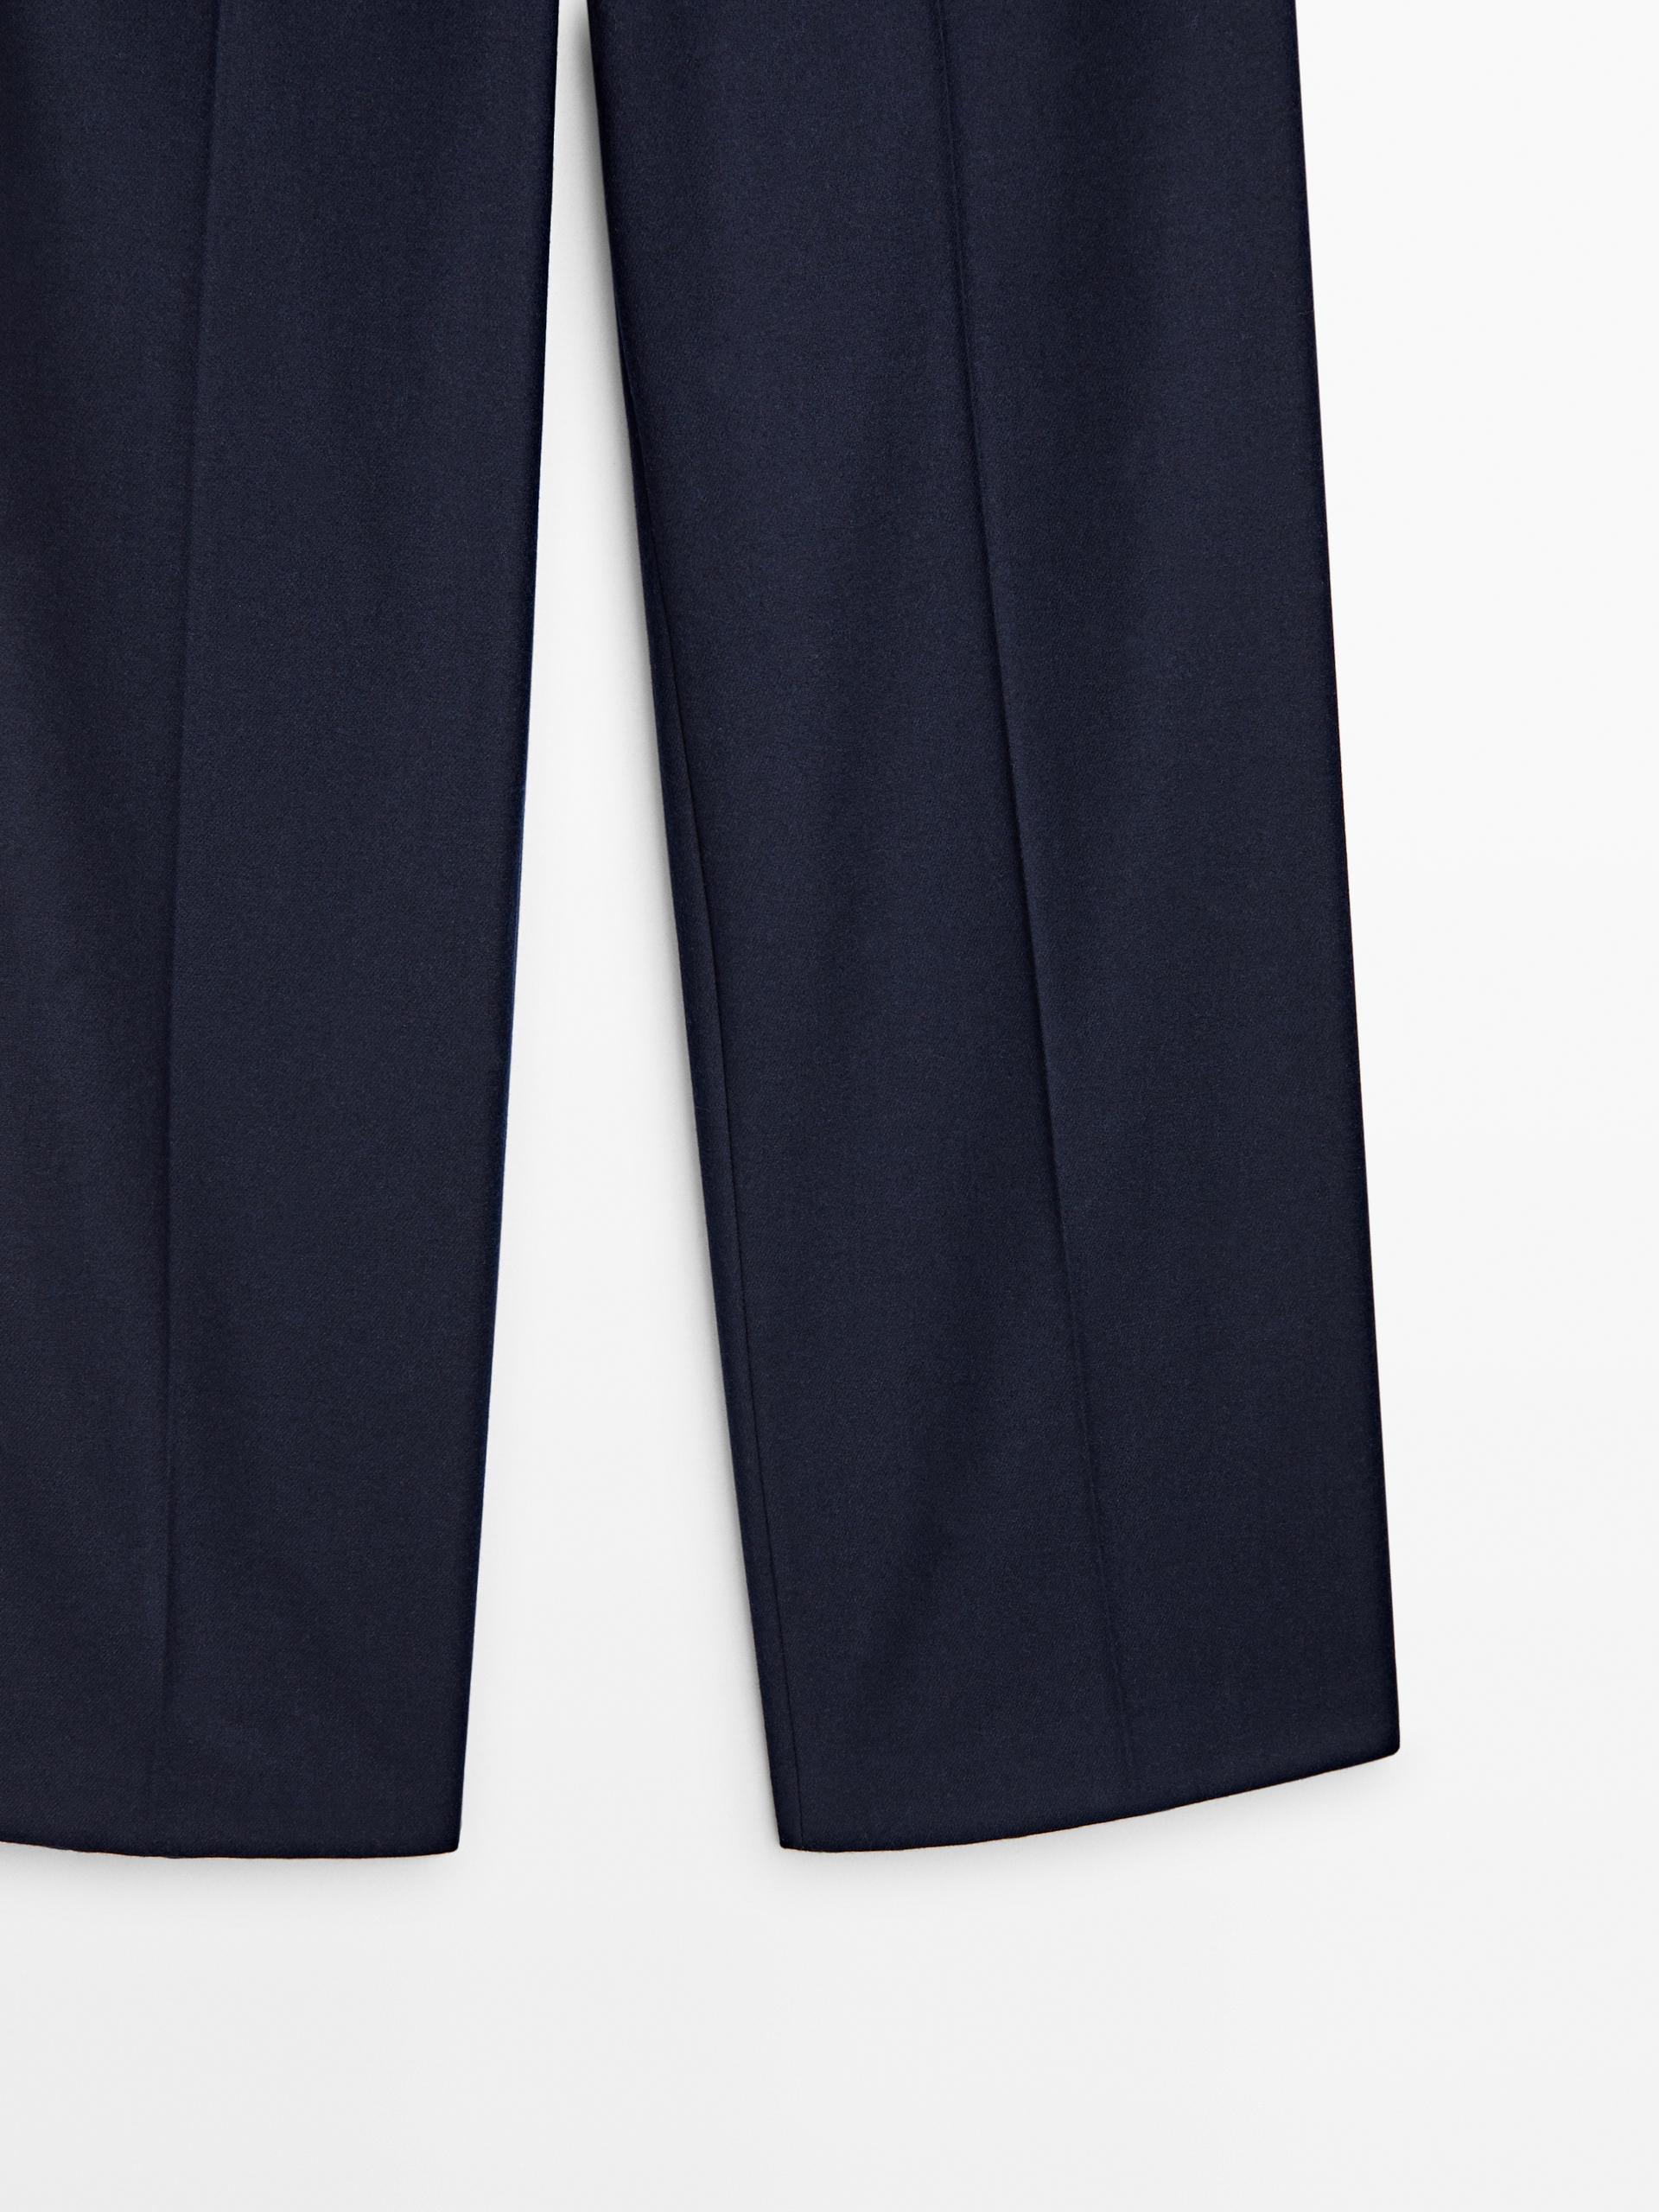 Zara Basic Collection Navy Blue Lightweight Drawstring Trousers